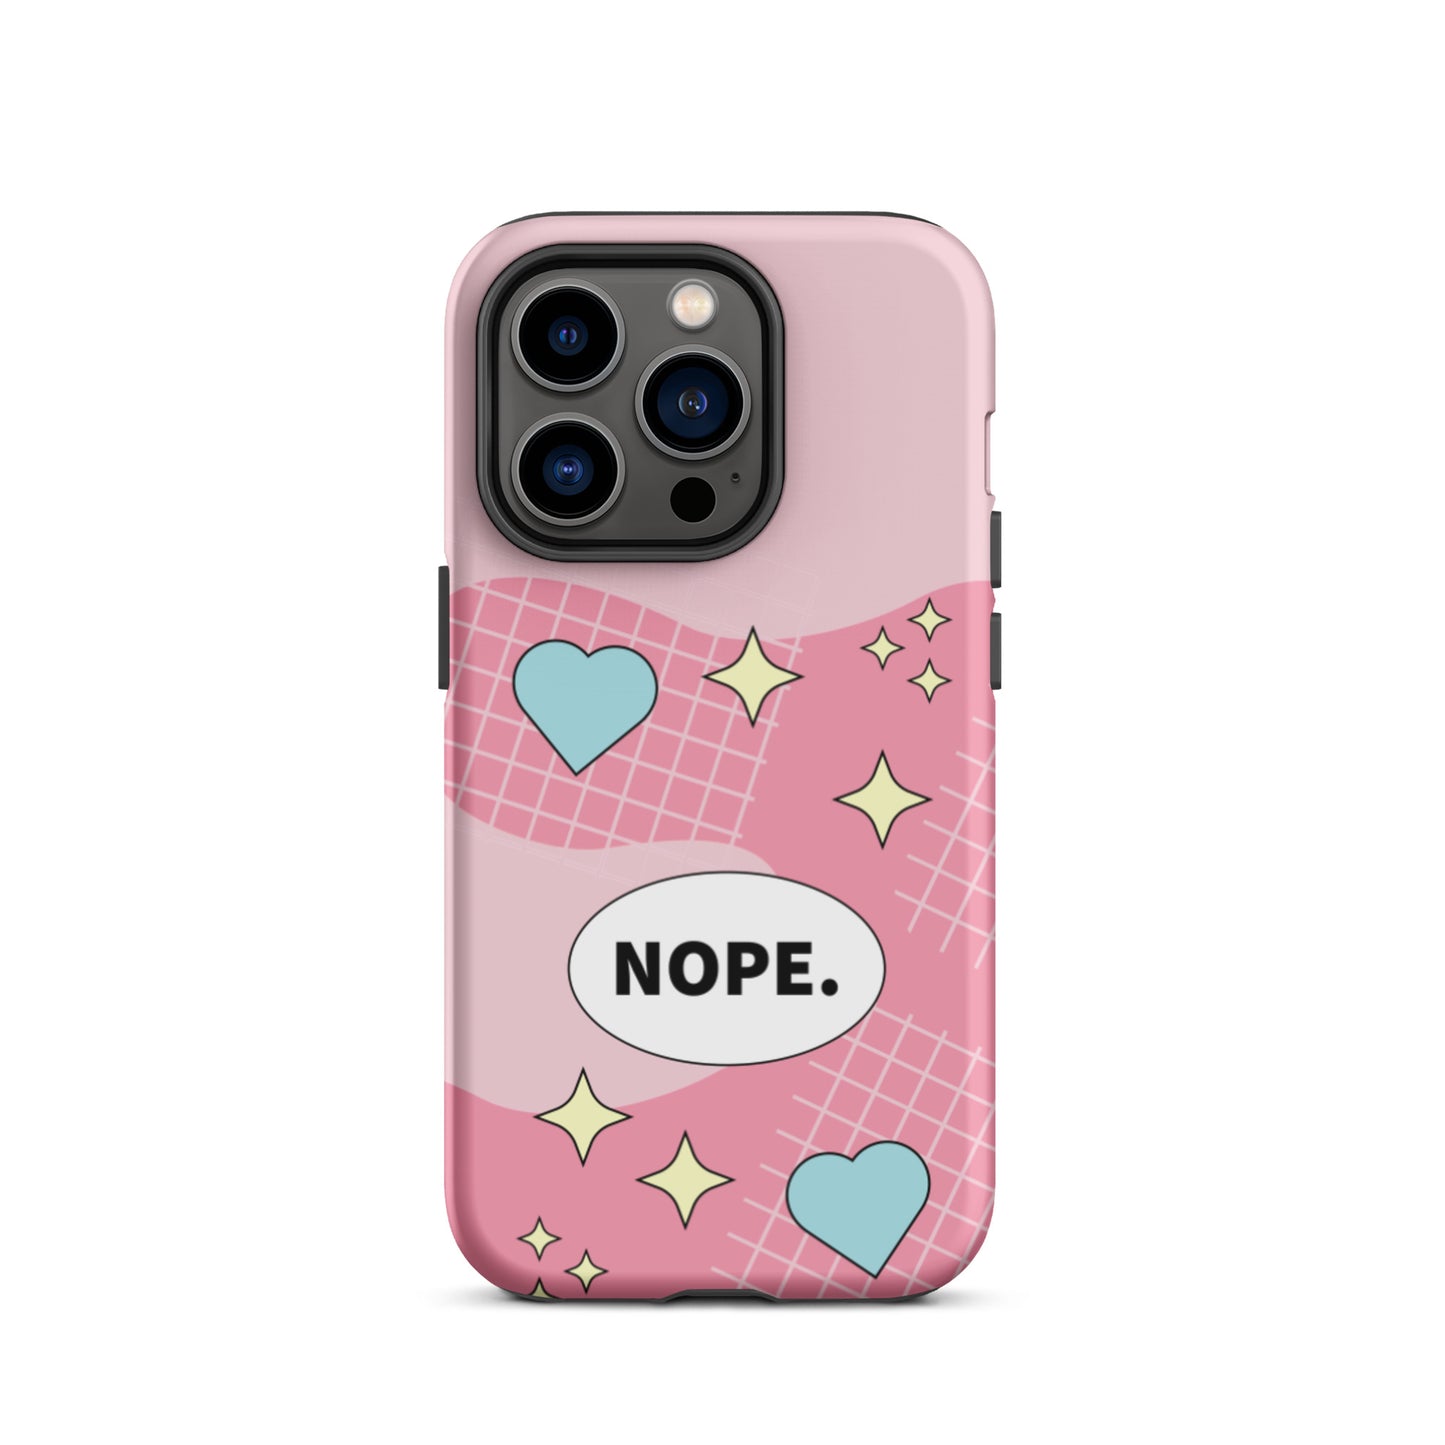 NOPE - Tough iPhone case